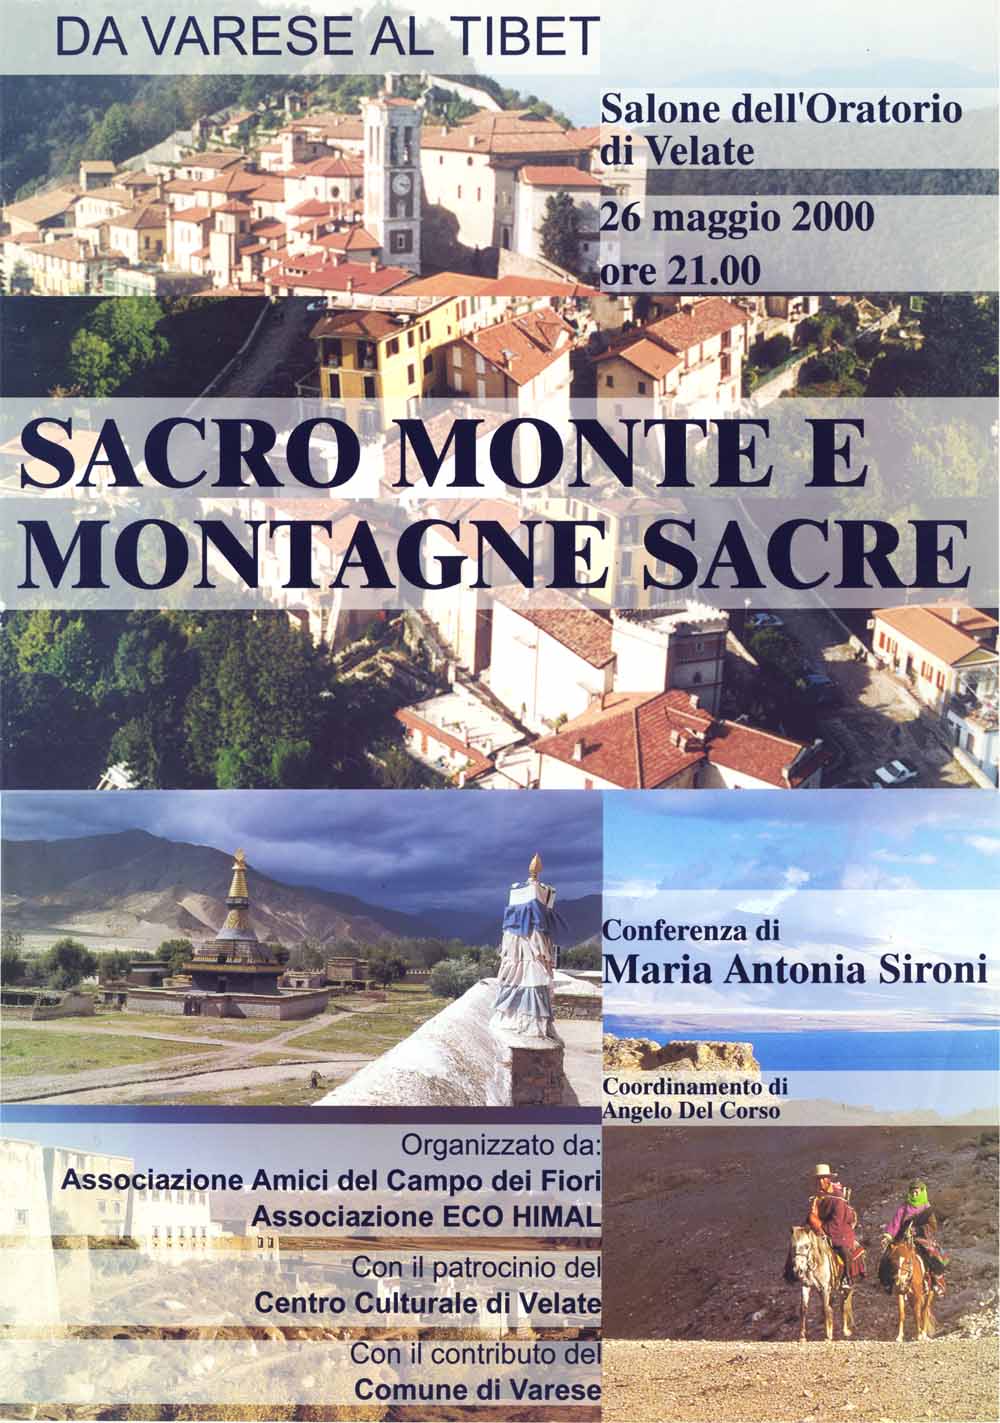 Da Varese al Tibet - Sacro Monte e montagne sacre